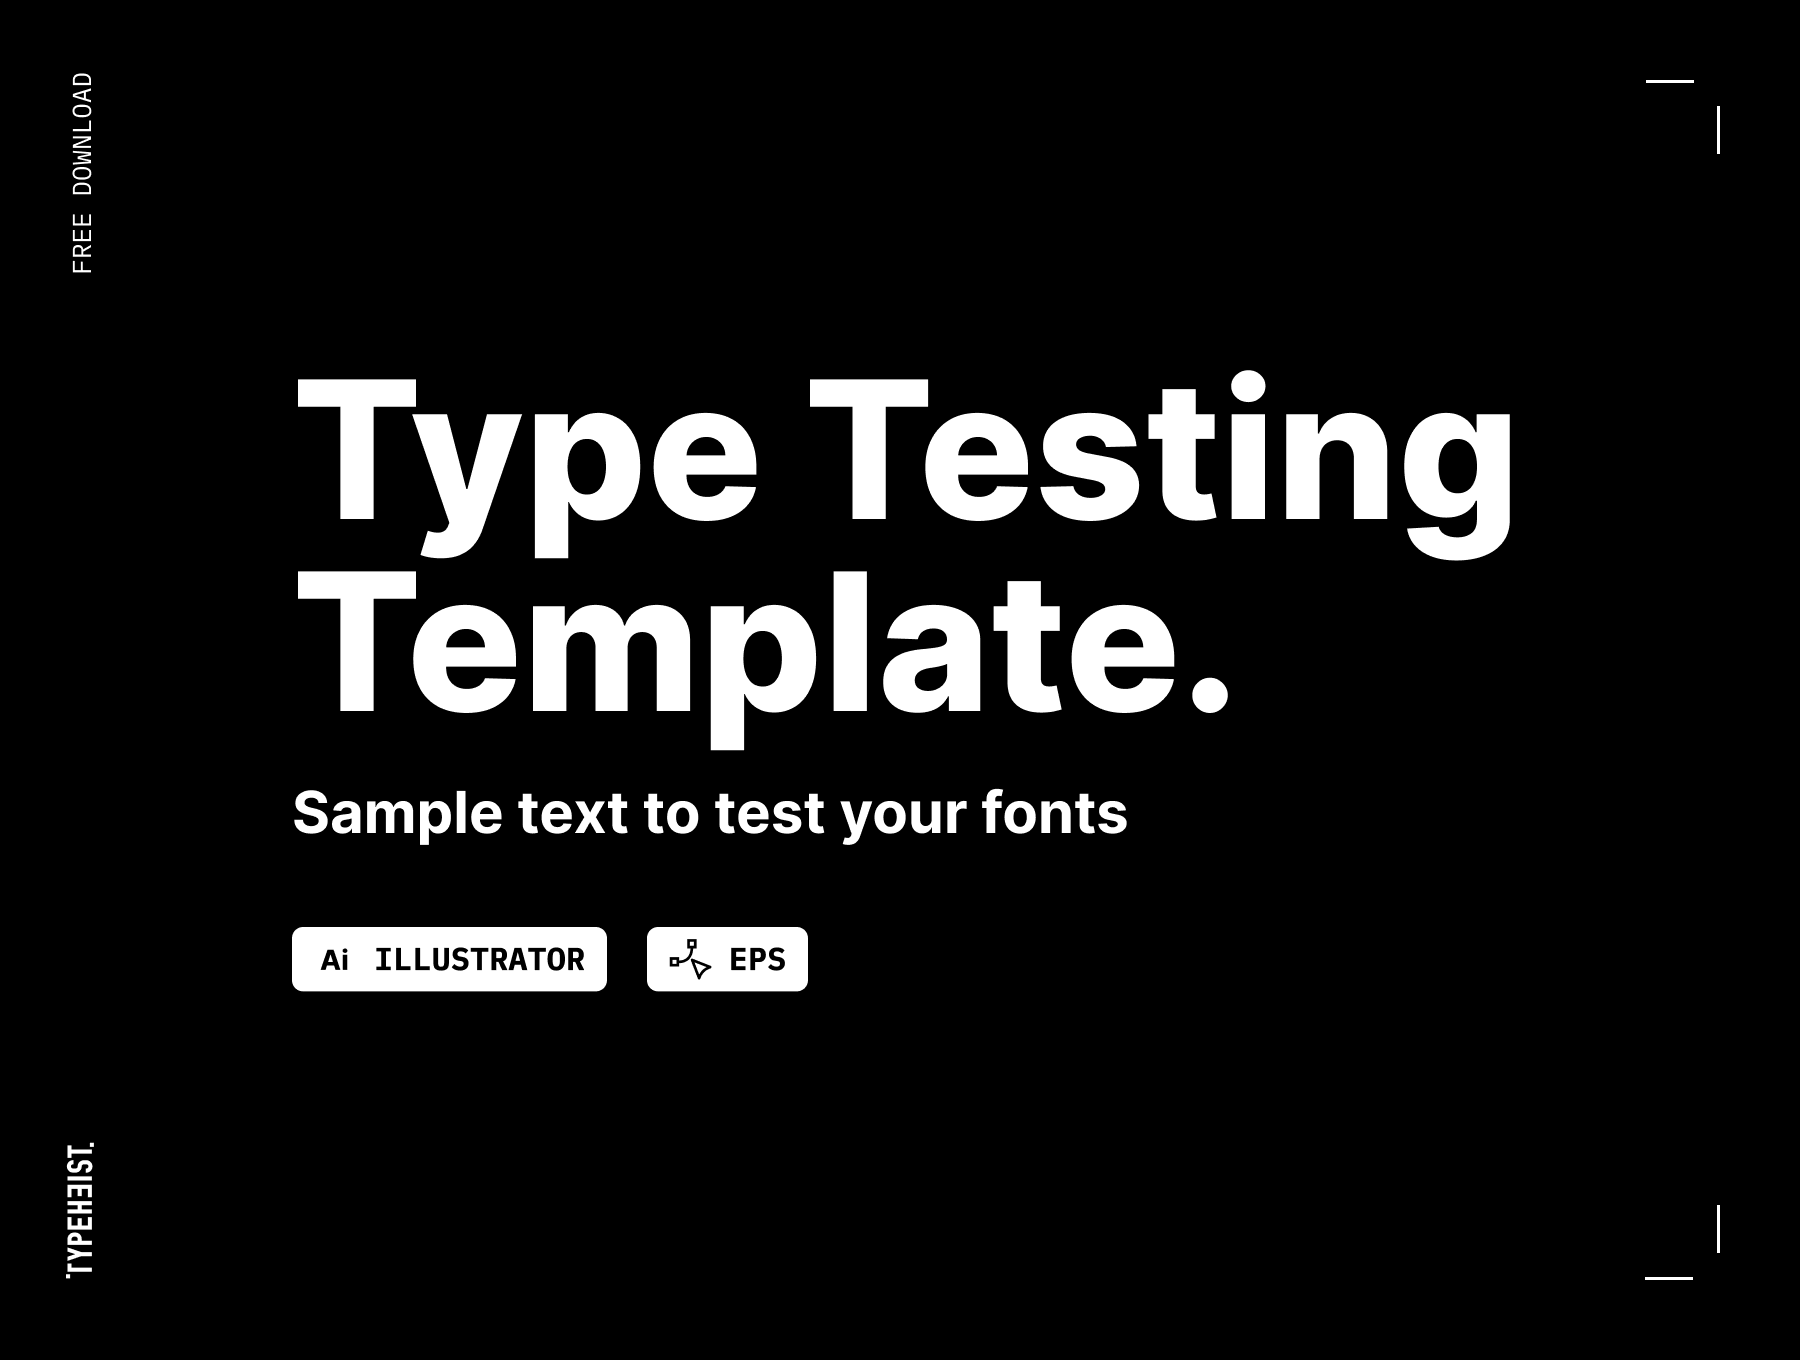 Type Testing Template